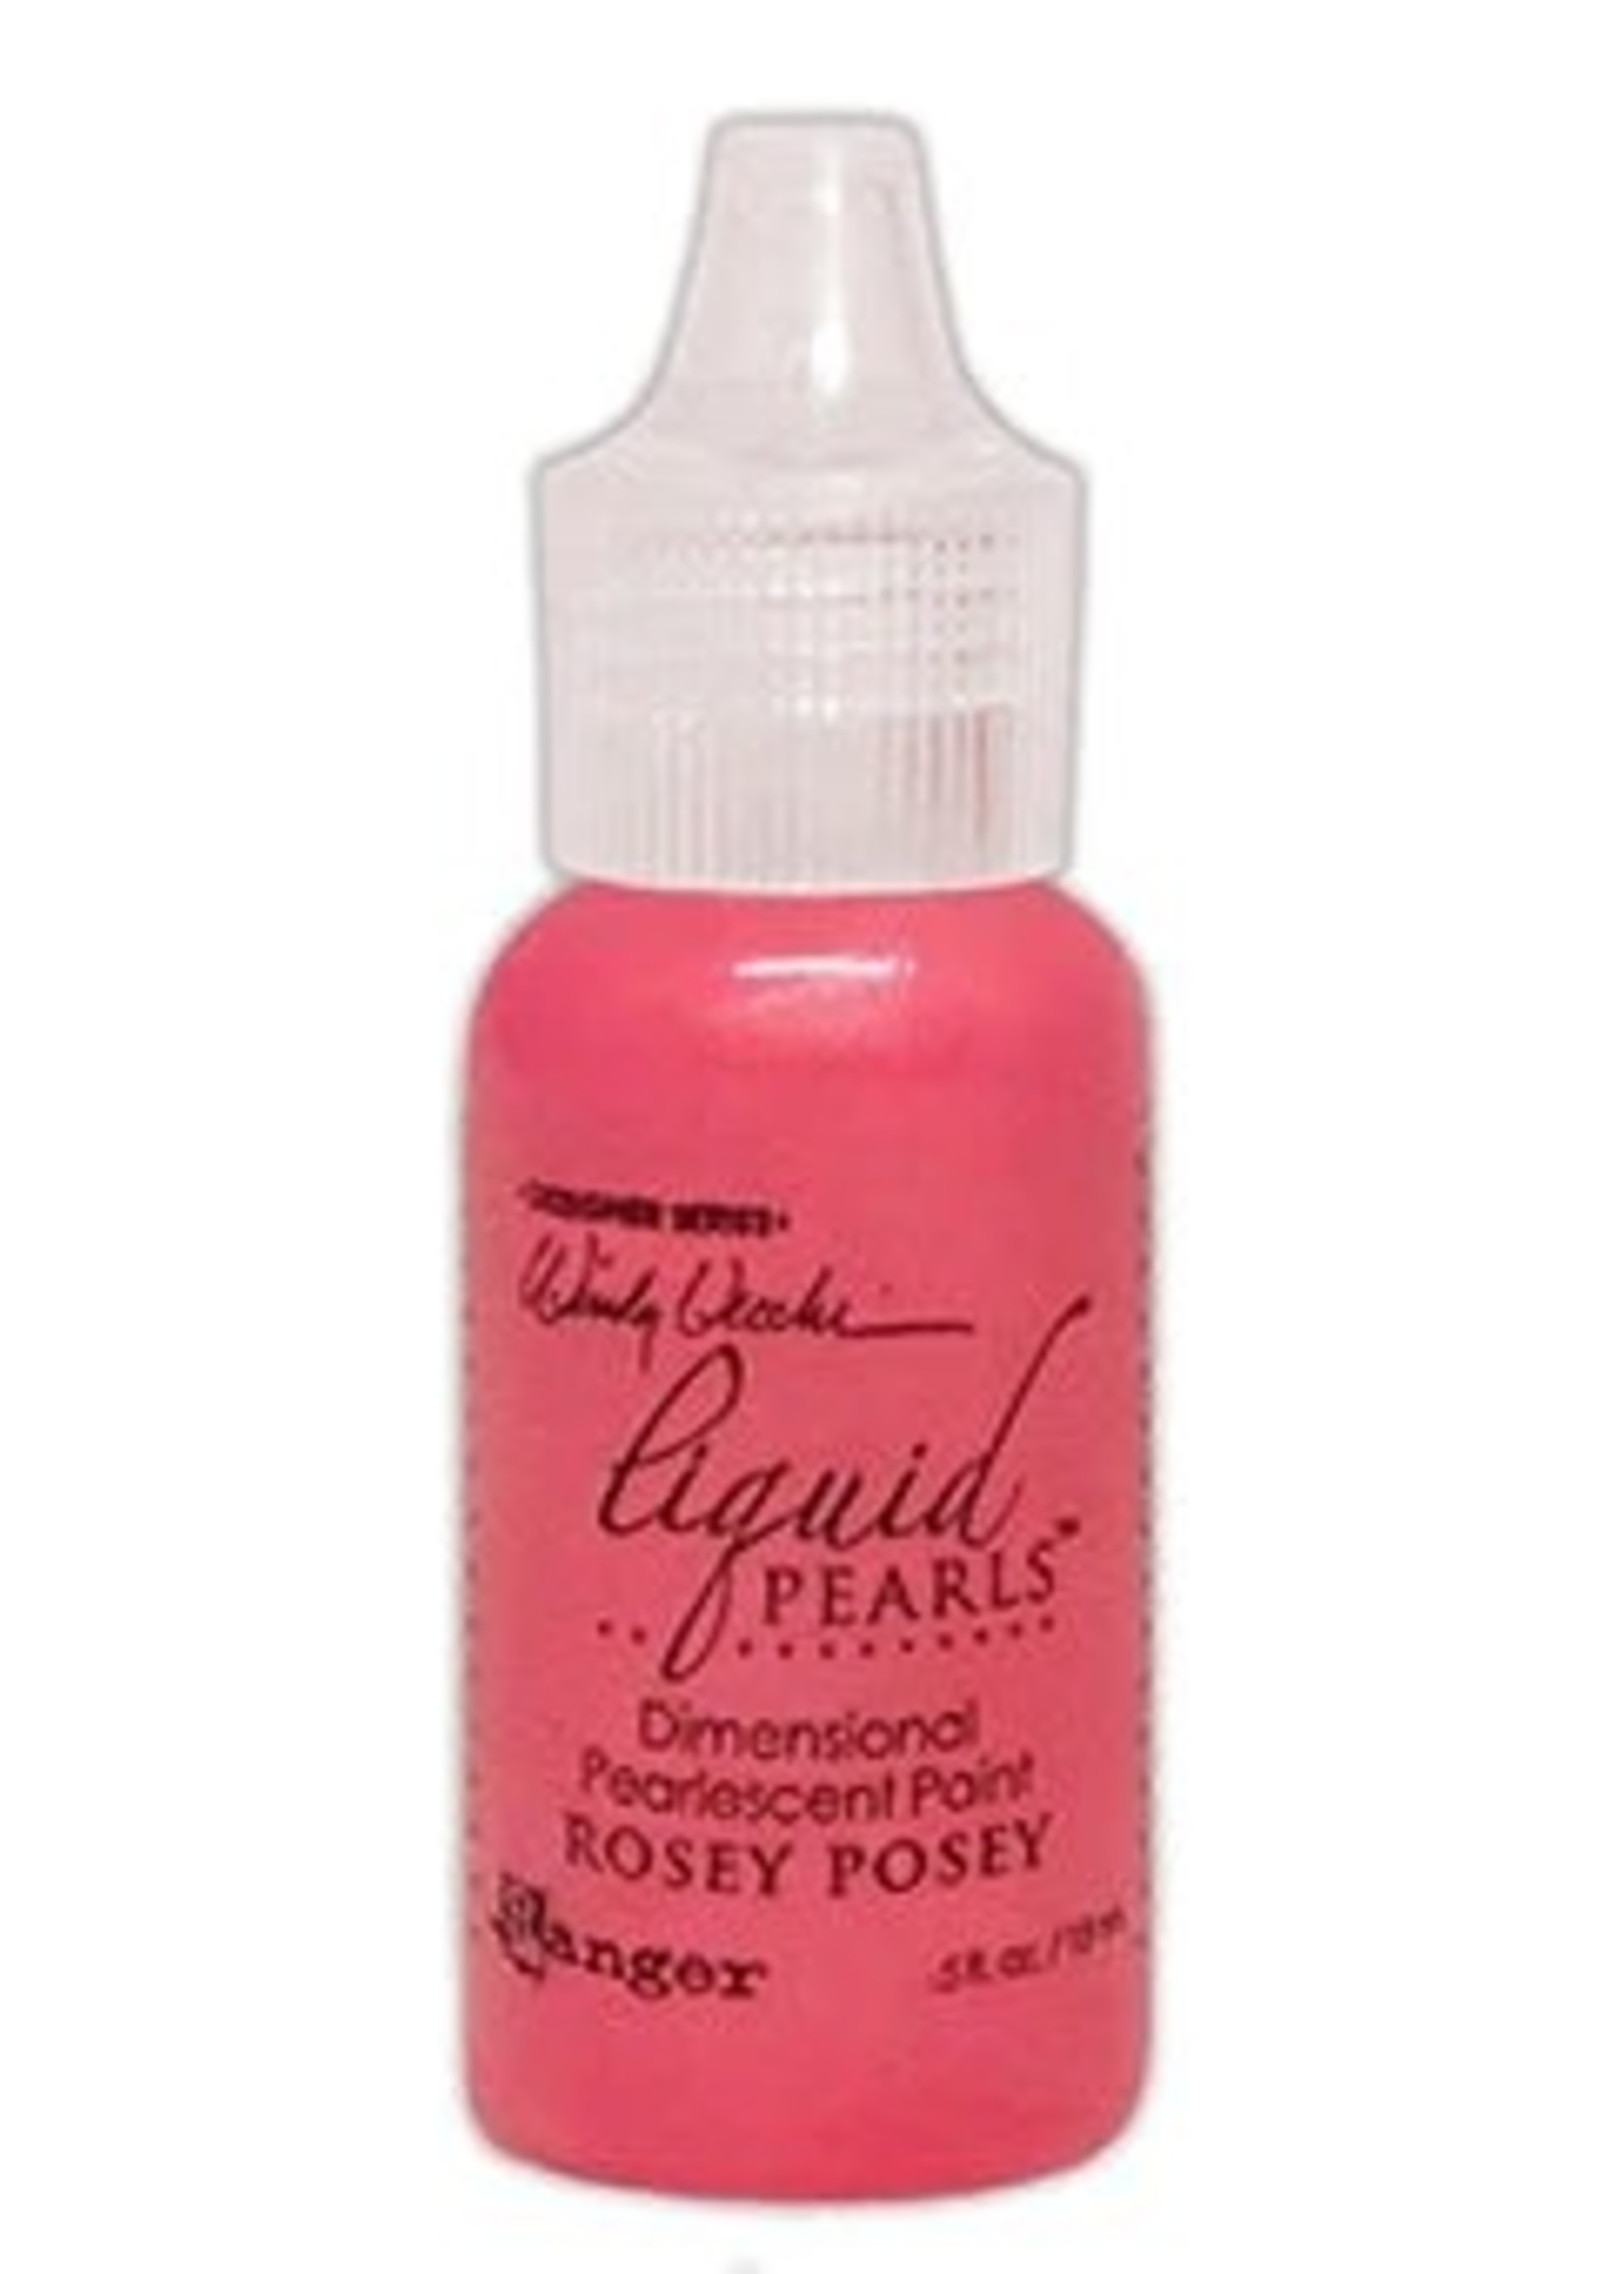 RANGER Ranger Liquid Pearls: Rosey Posey